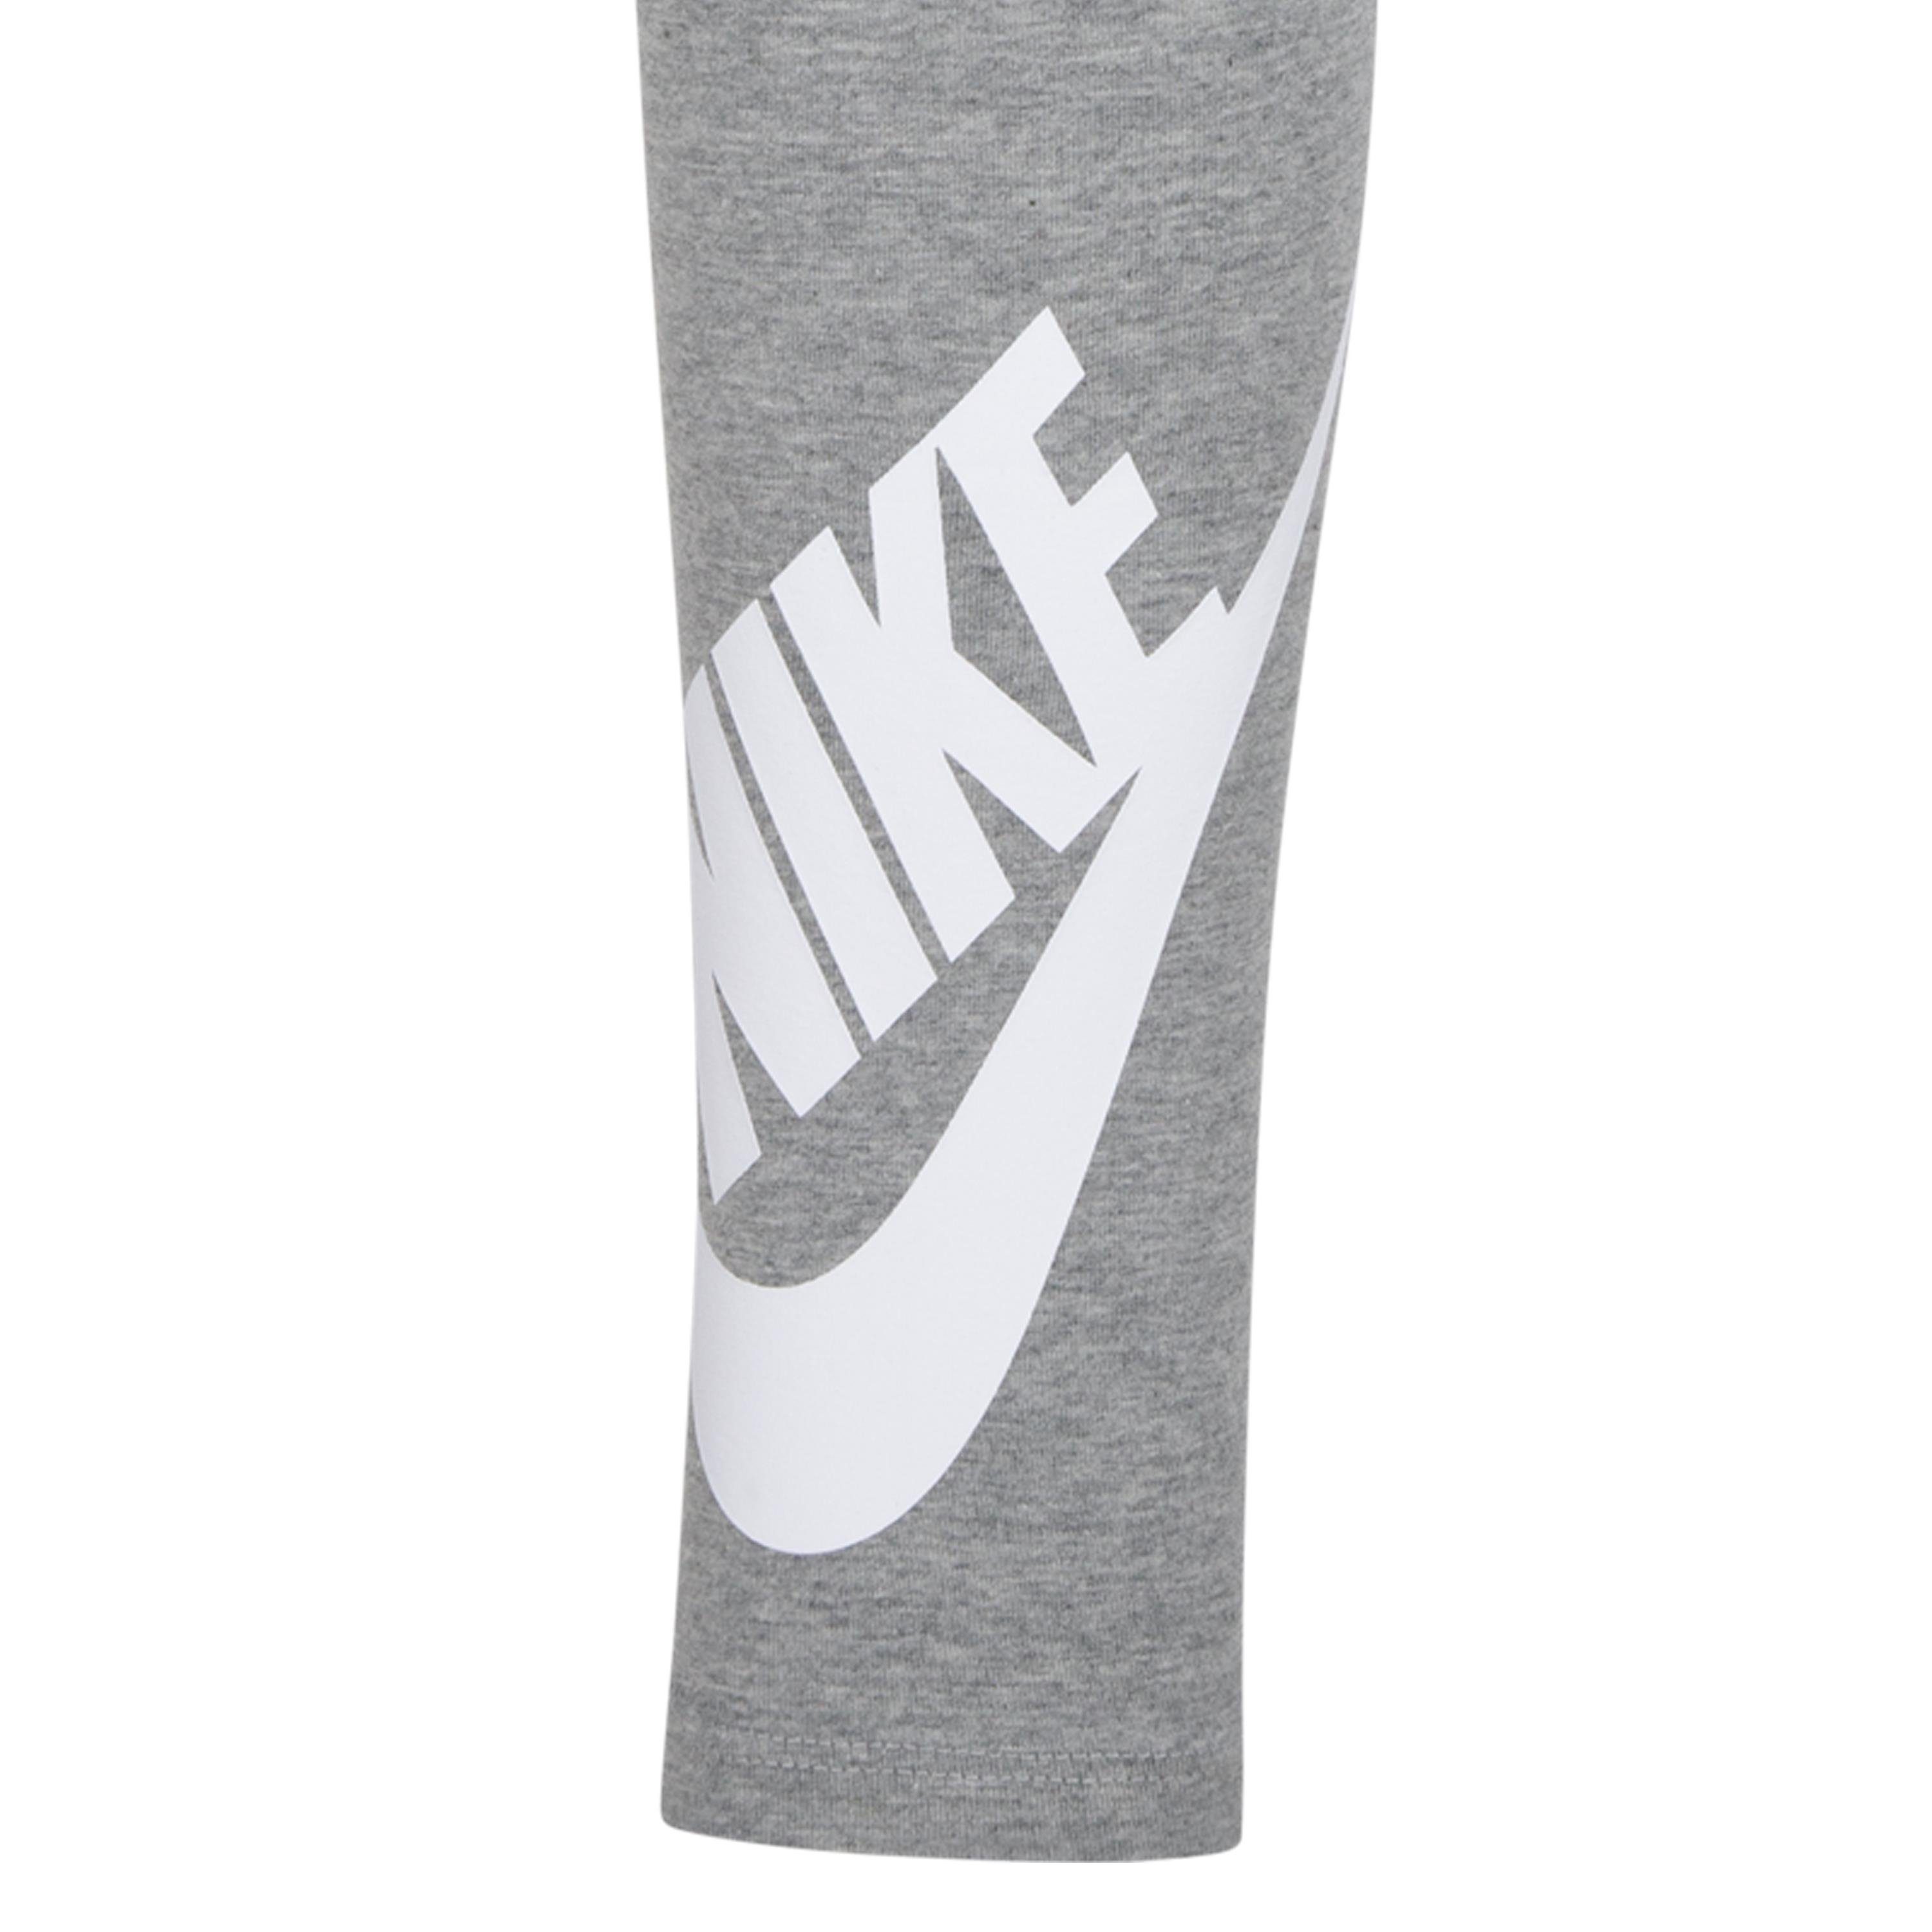 Nike NKG Sportswear SEE für LEG Leggings Kinder A - LEGGING grau-meliert NSW G